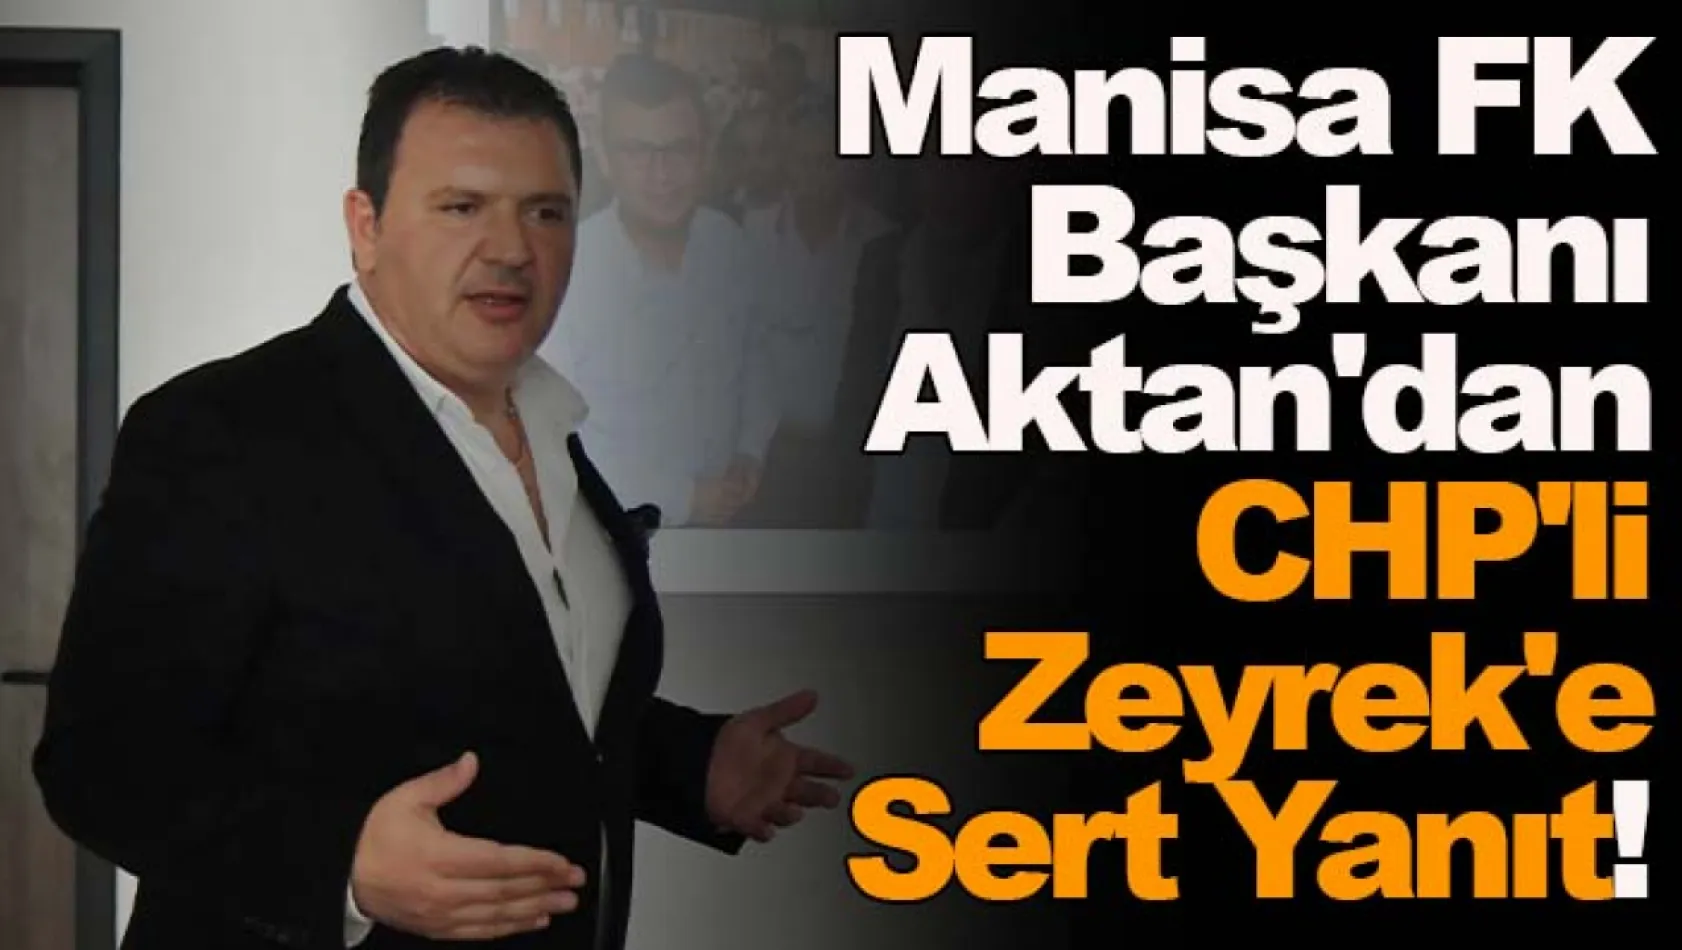 Manisa FK Başkanı Aktan'dan CHP'li Zeyrek'e sert yanıt!